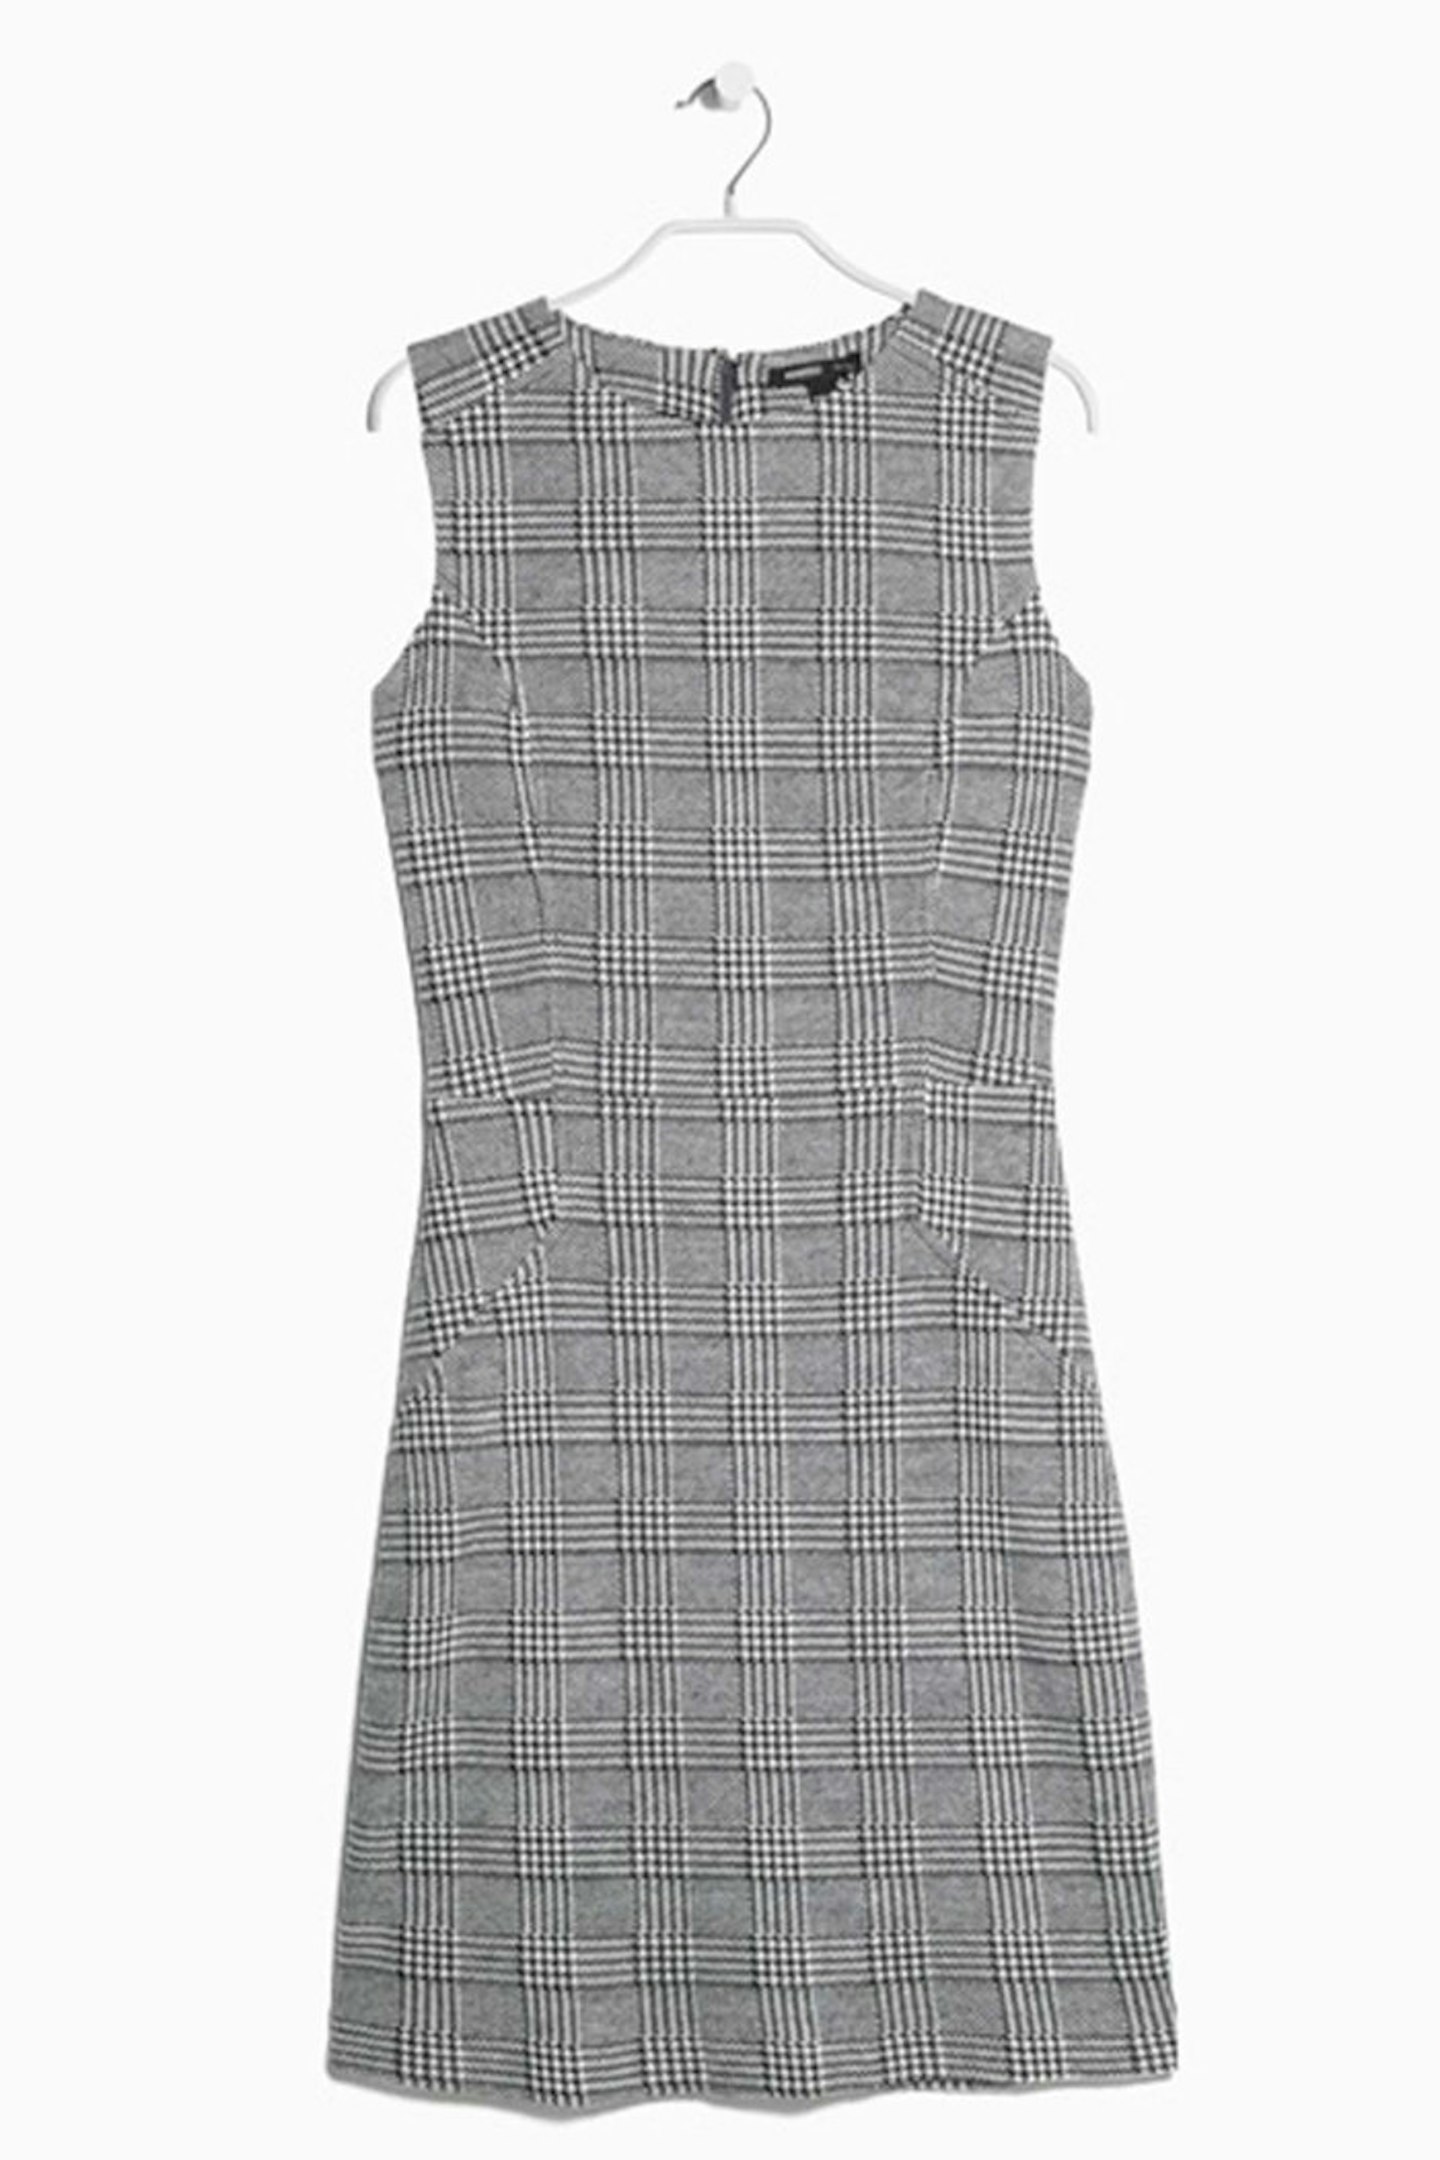 13. Wool Blend Dress, £44.99, Mango